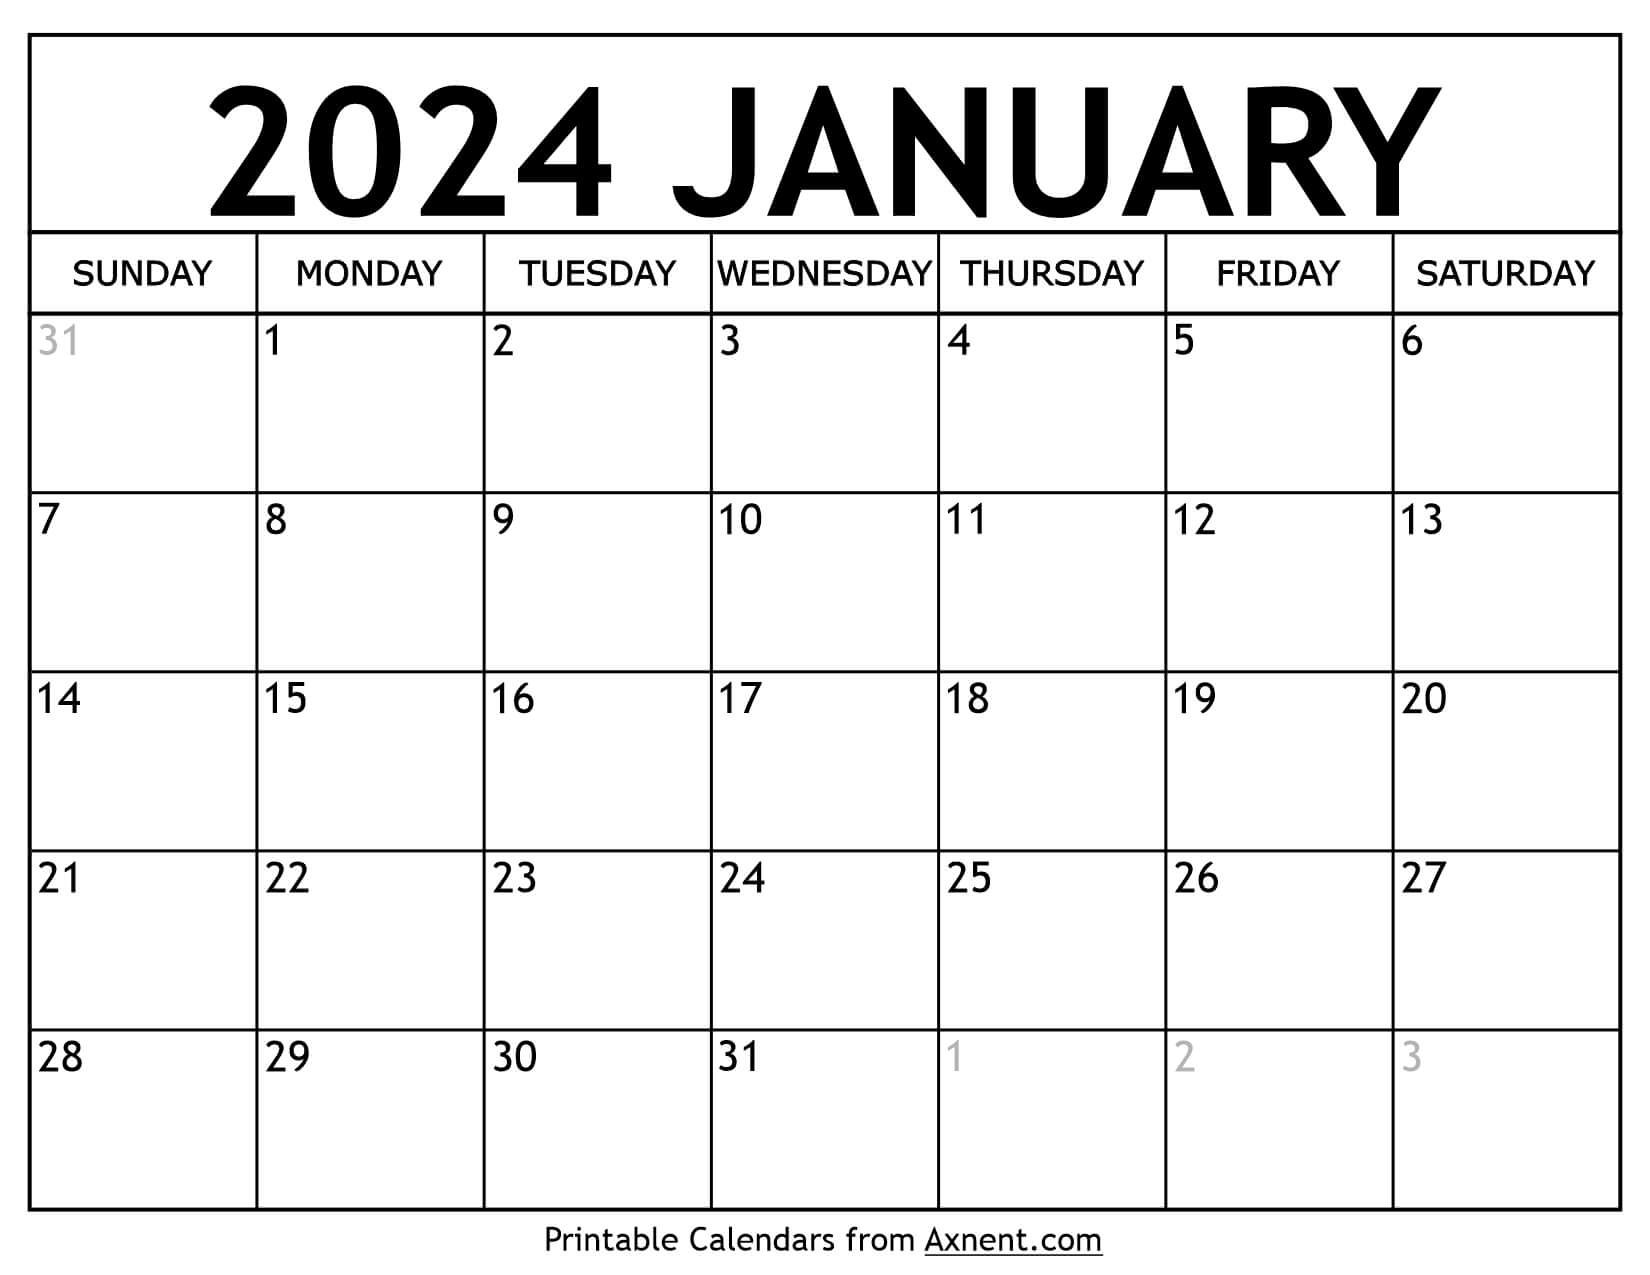 Printable January 2024 Calendar Template - Print Now for Free Printable Monthly Calendar January 2024